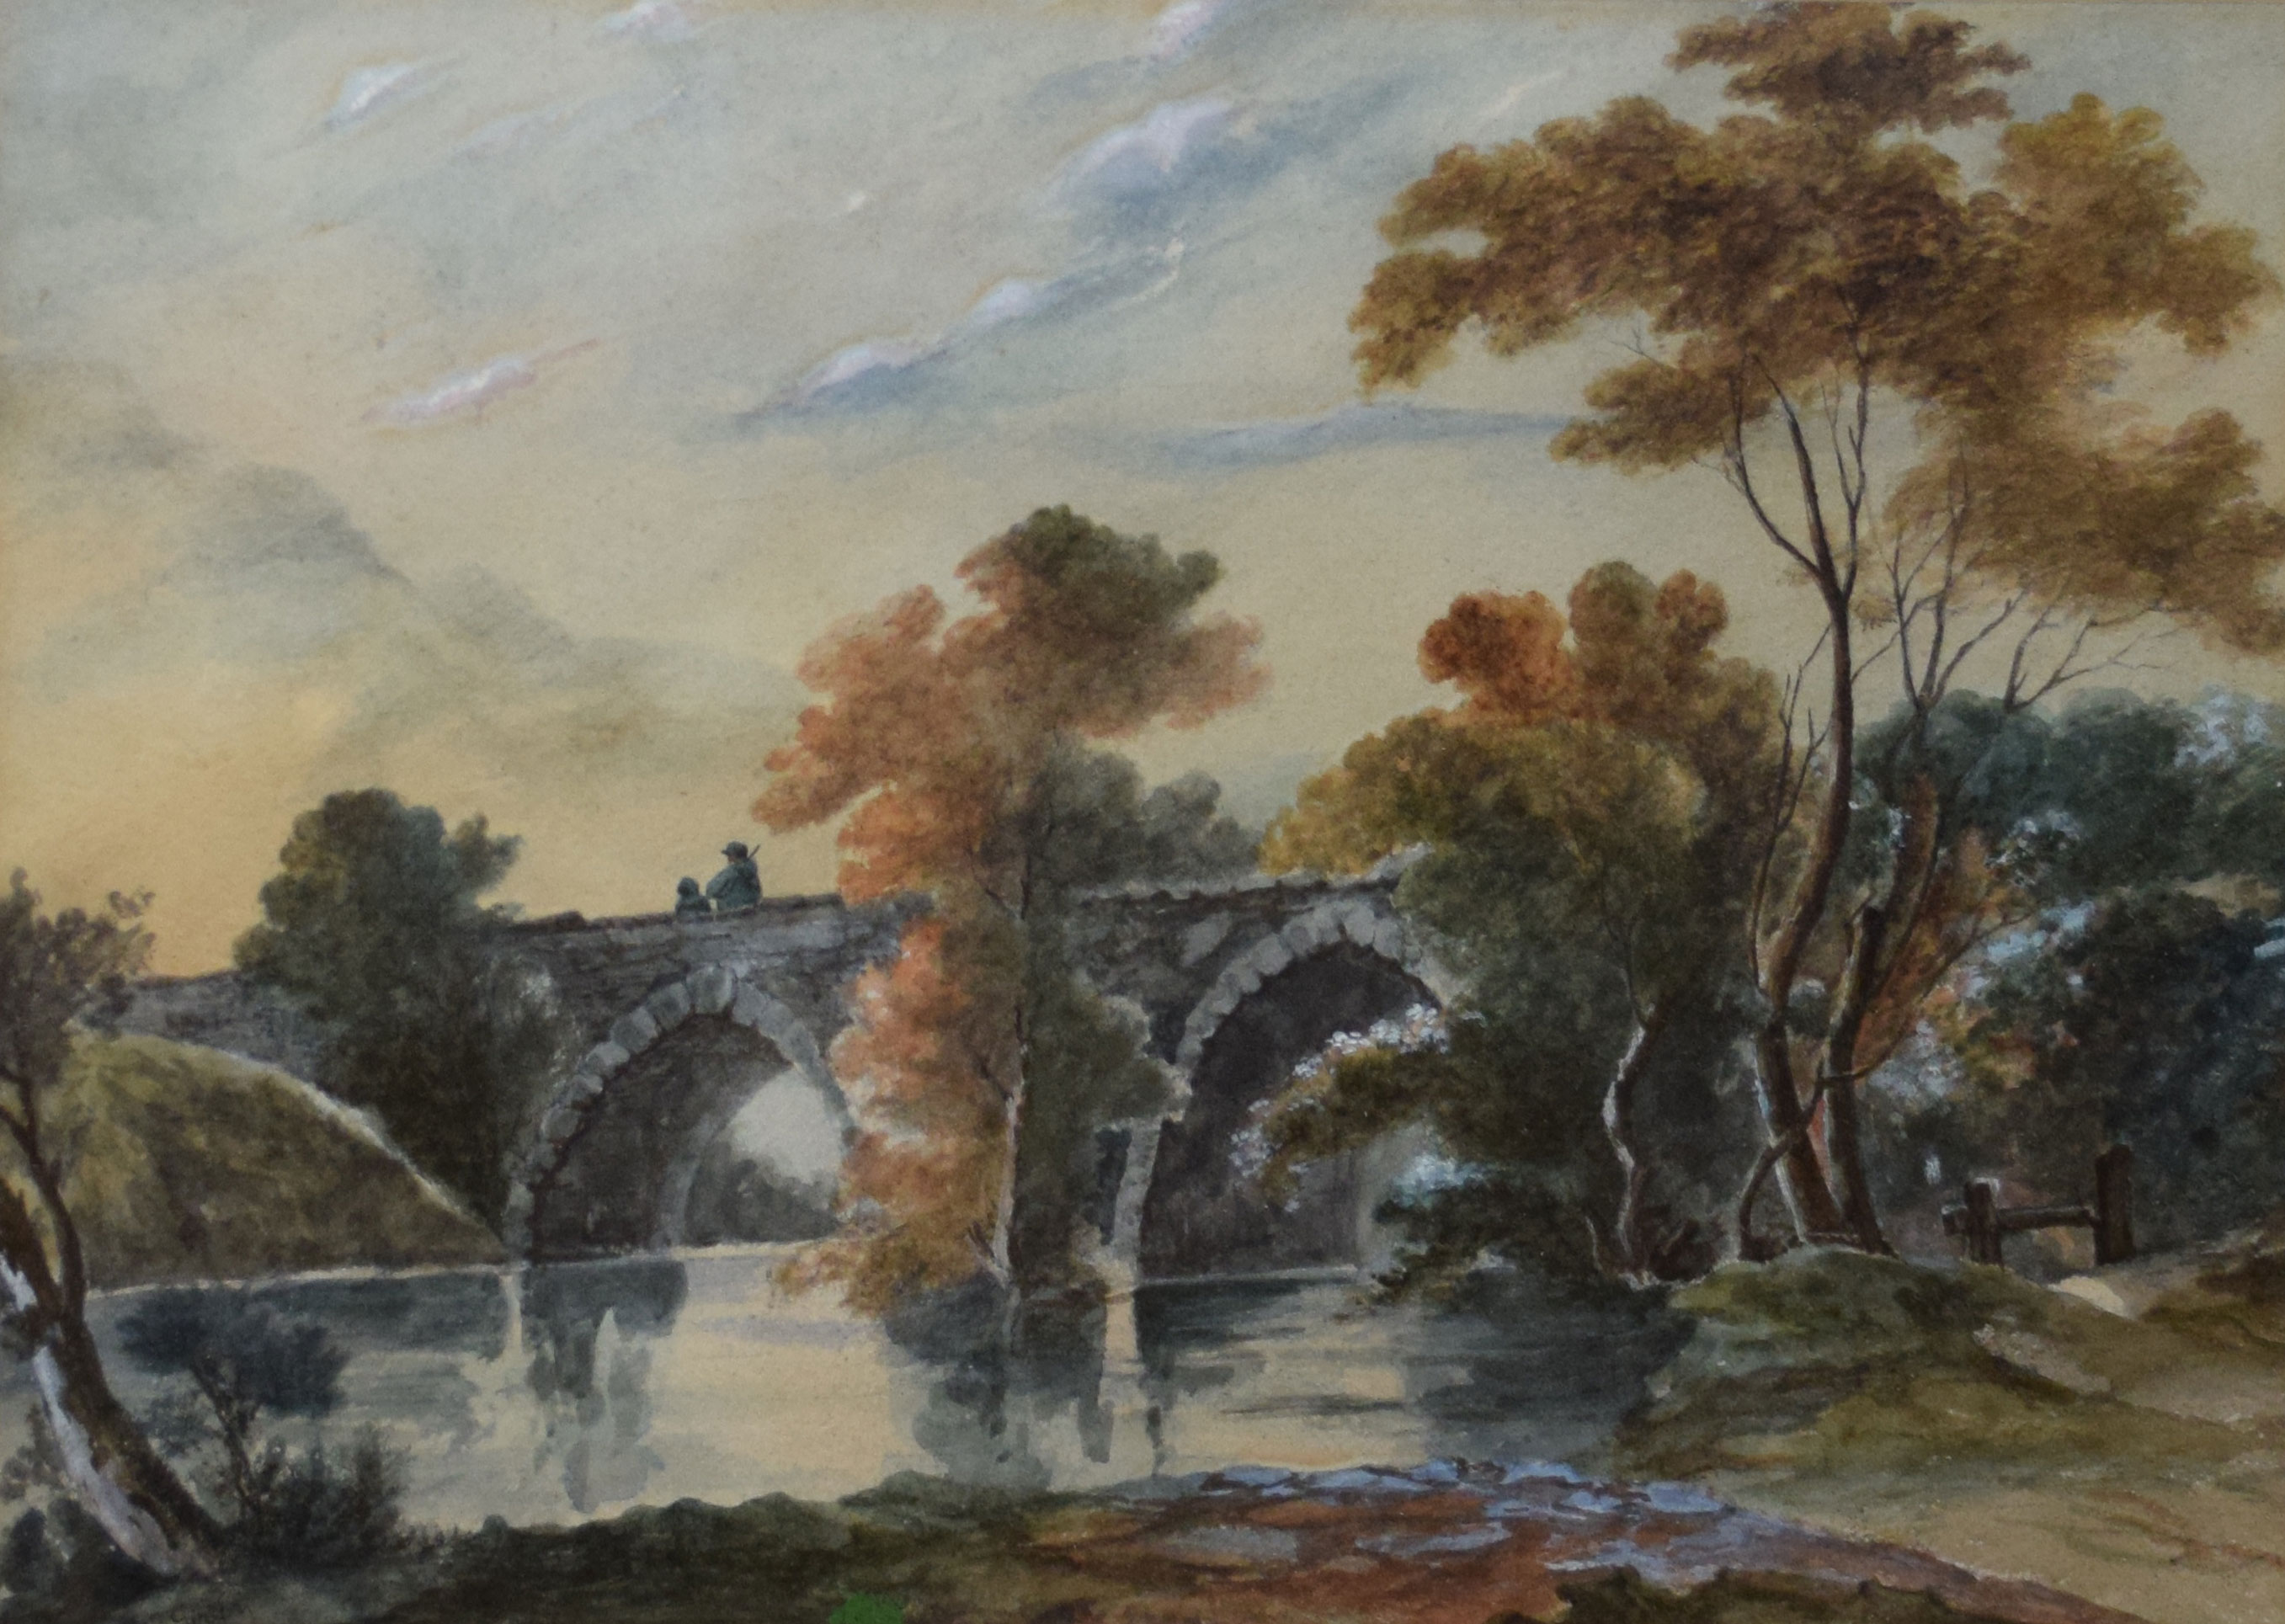 English School (19th century), River landscape with figures on a bridge, 25 x 35cm